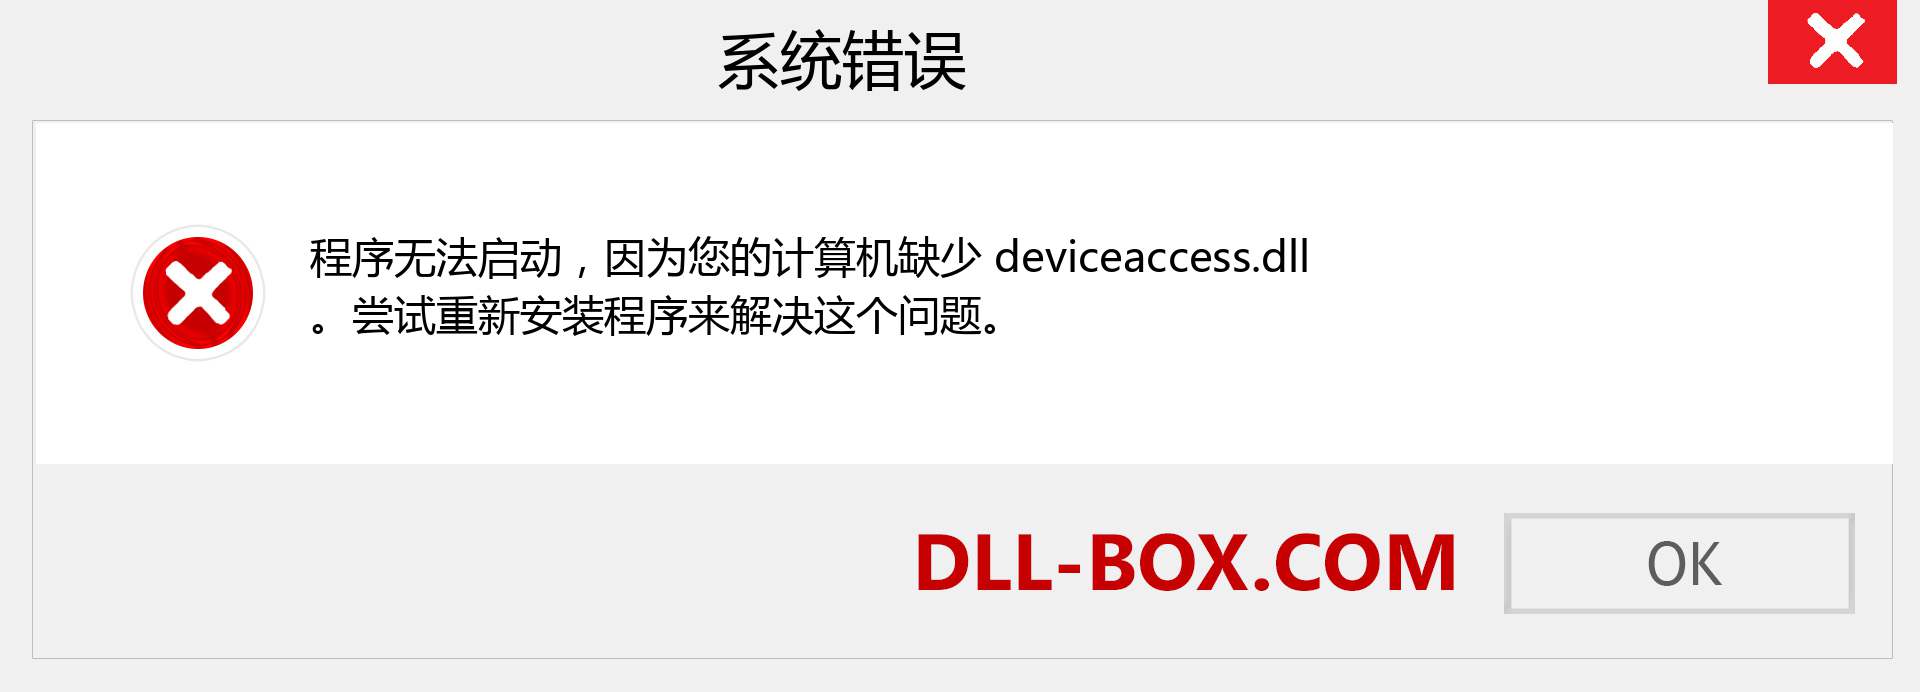 deviceaccess.dll 文件丢失？。 适用于 Windows 7、8、10 的下载 - 修复 Windows、照片、图像上的 deviceaccess dll 丢失错误